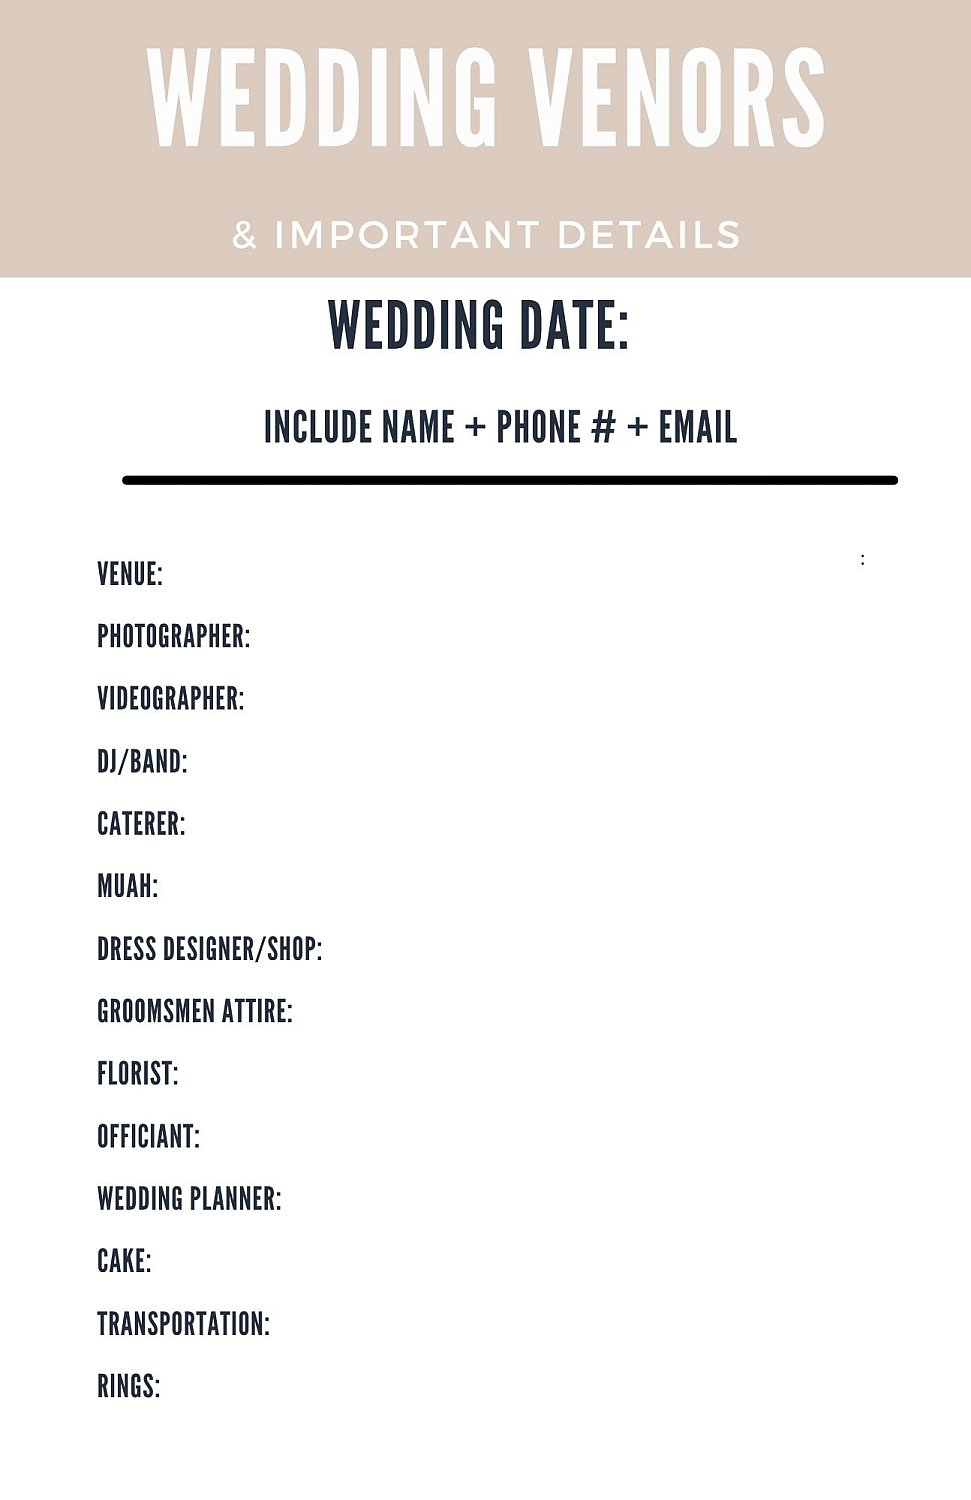 Free Wedding Vendor List | Wedding_Vendors.jpg